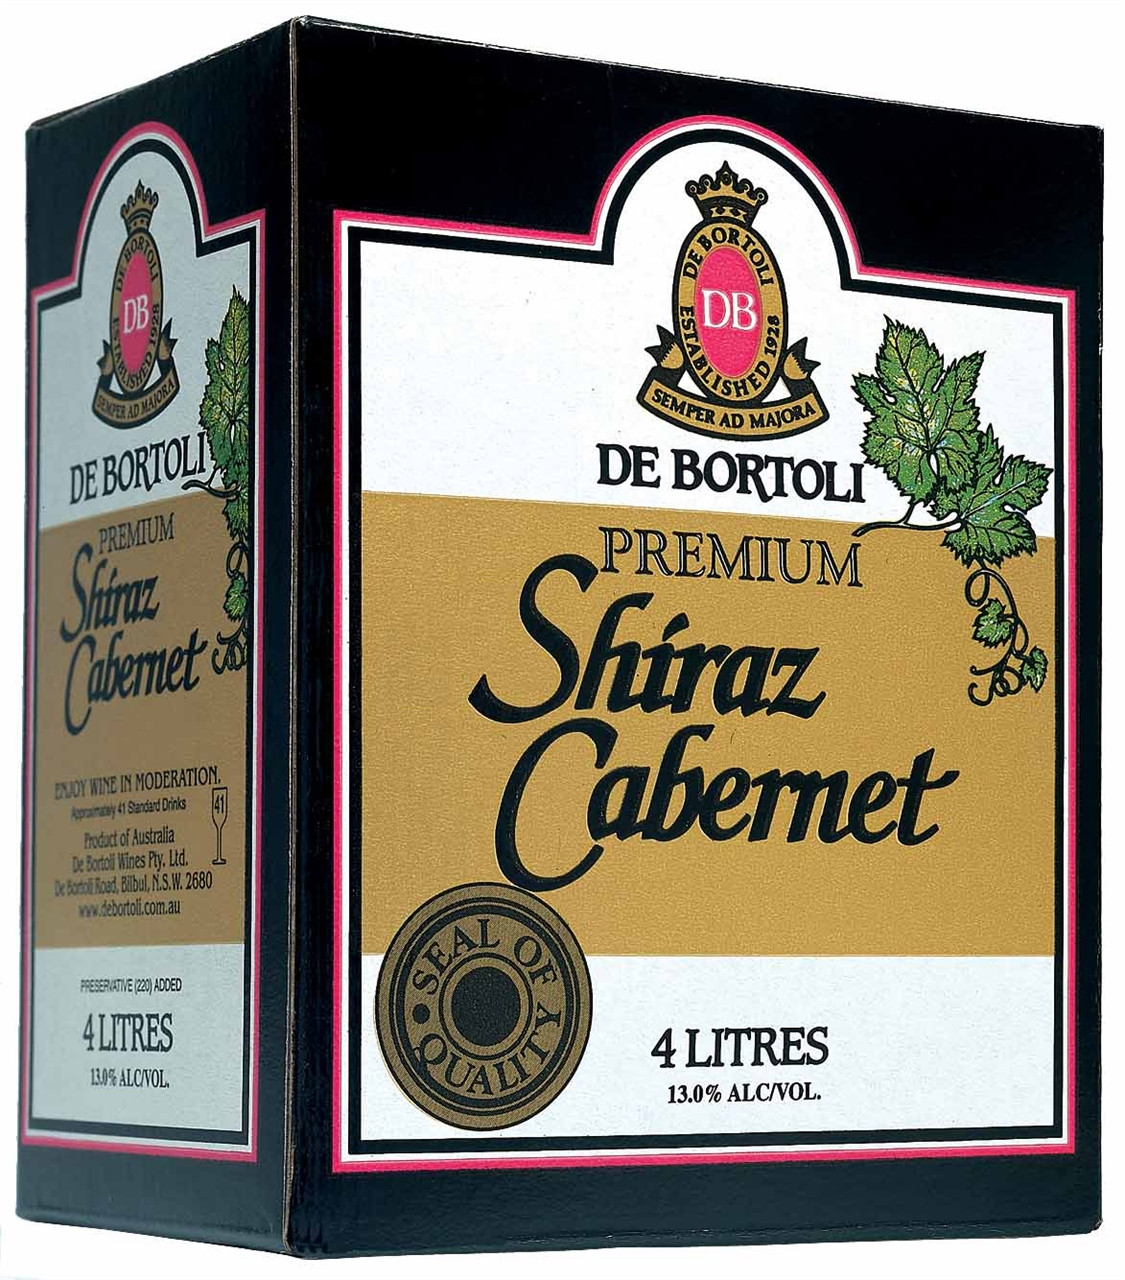 De Bortolis Premium Shiraz Cabernet 4lt Cask